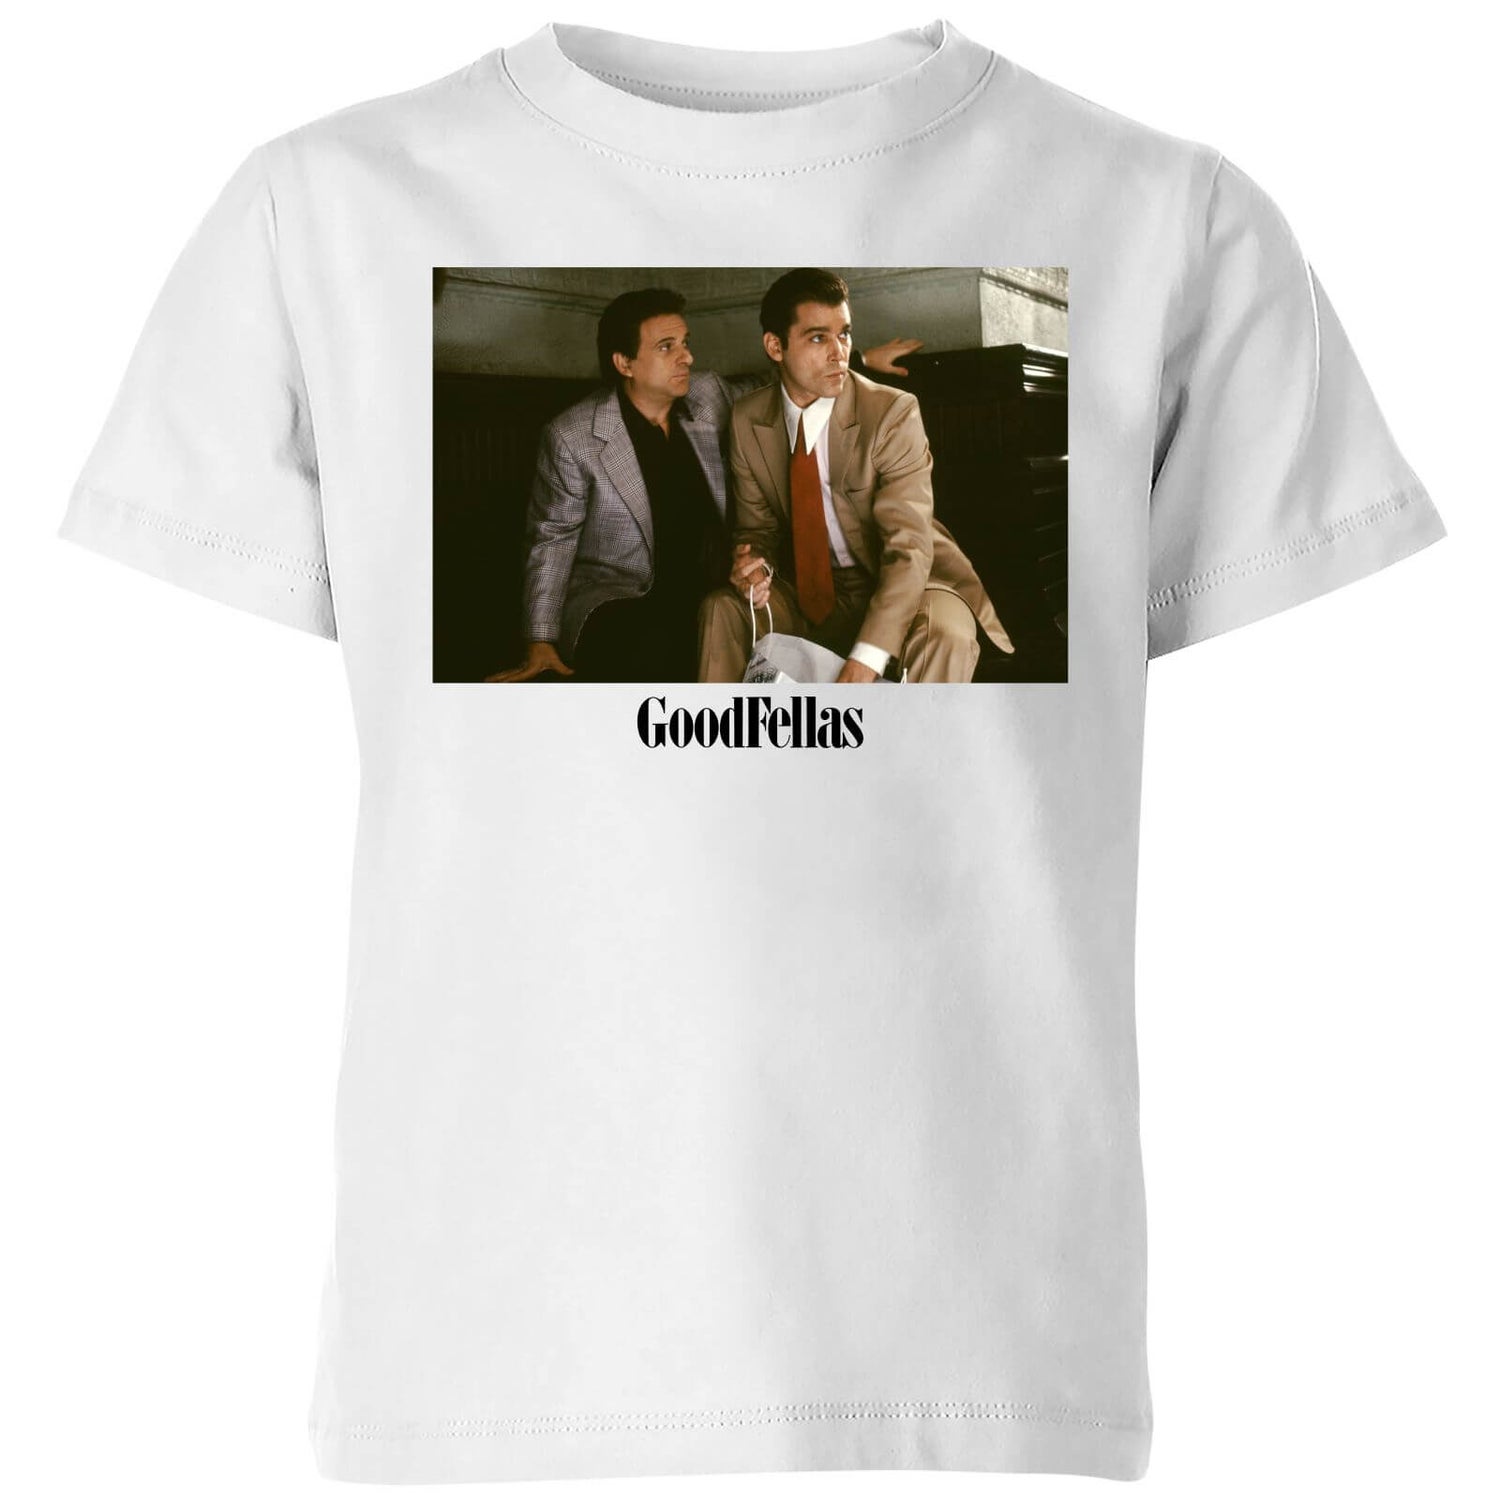 Goodfellas Joe Pesci And Ray Liotta Kids' T-Shirt - White